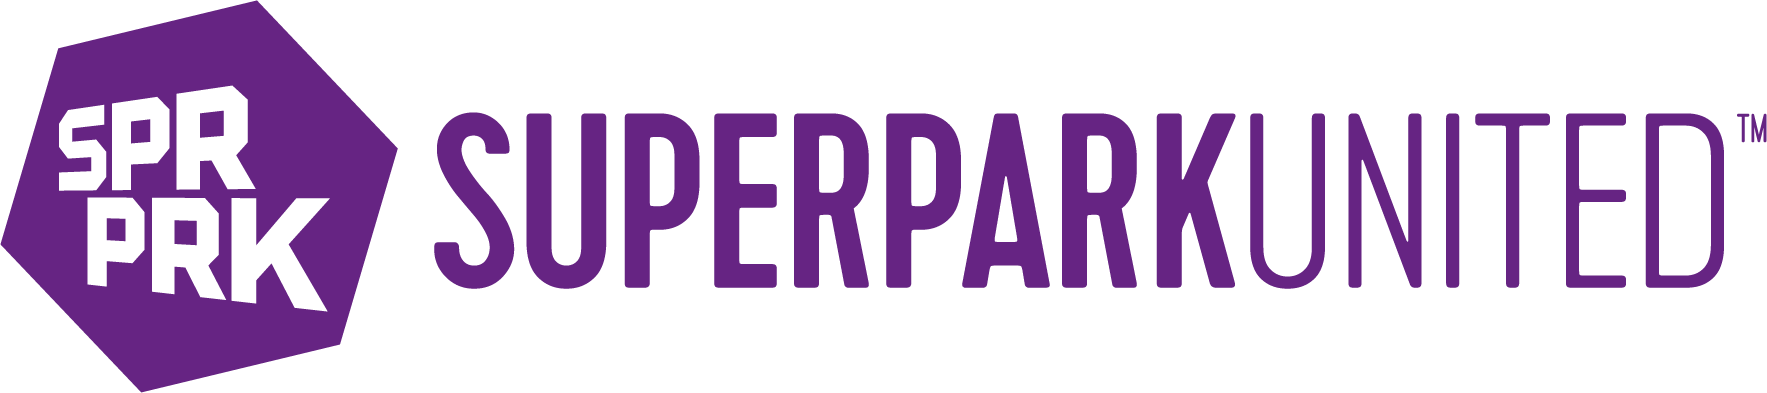 SuperParkUnited_logo